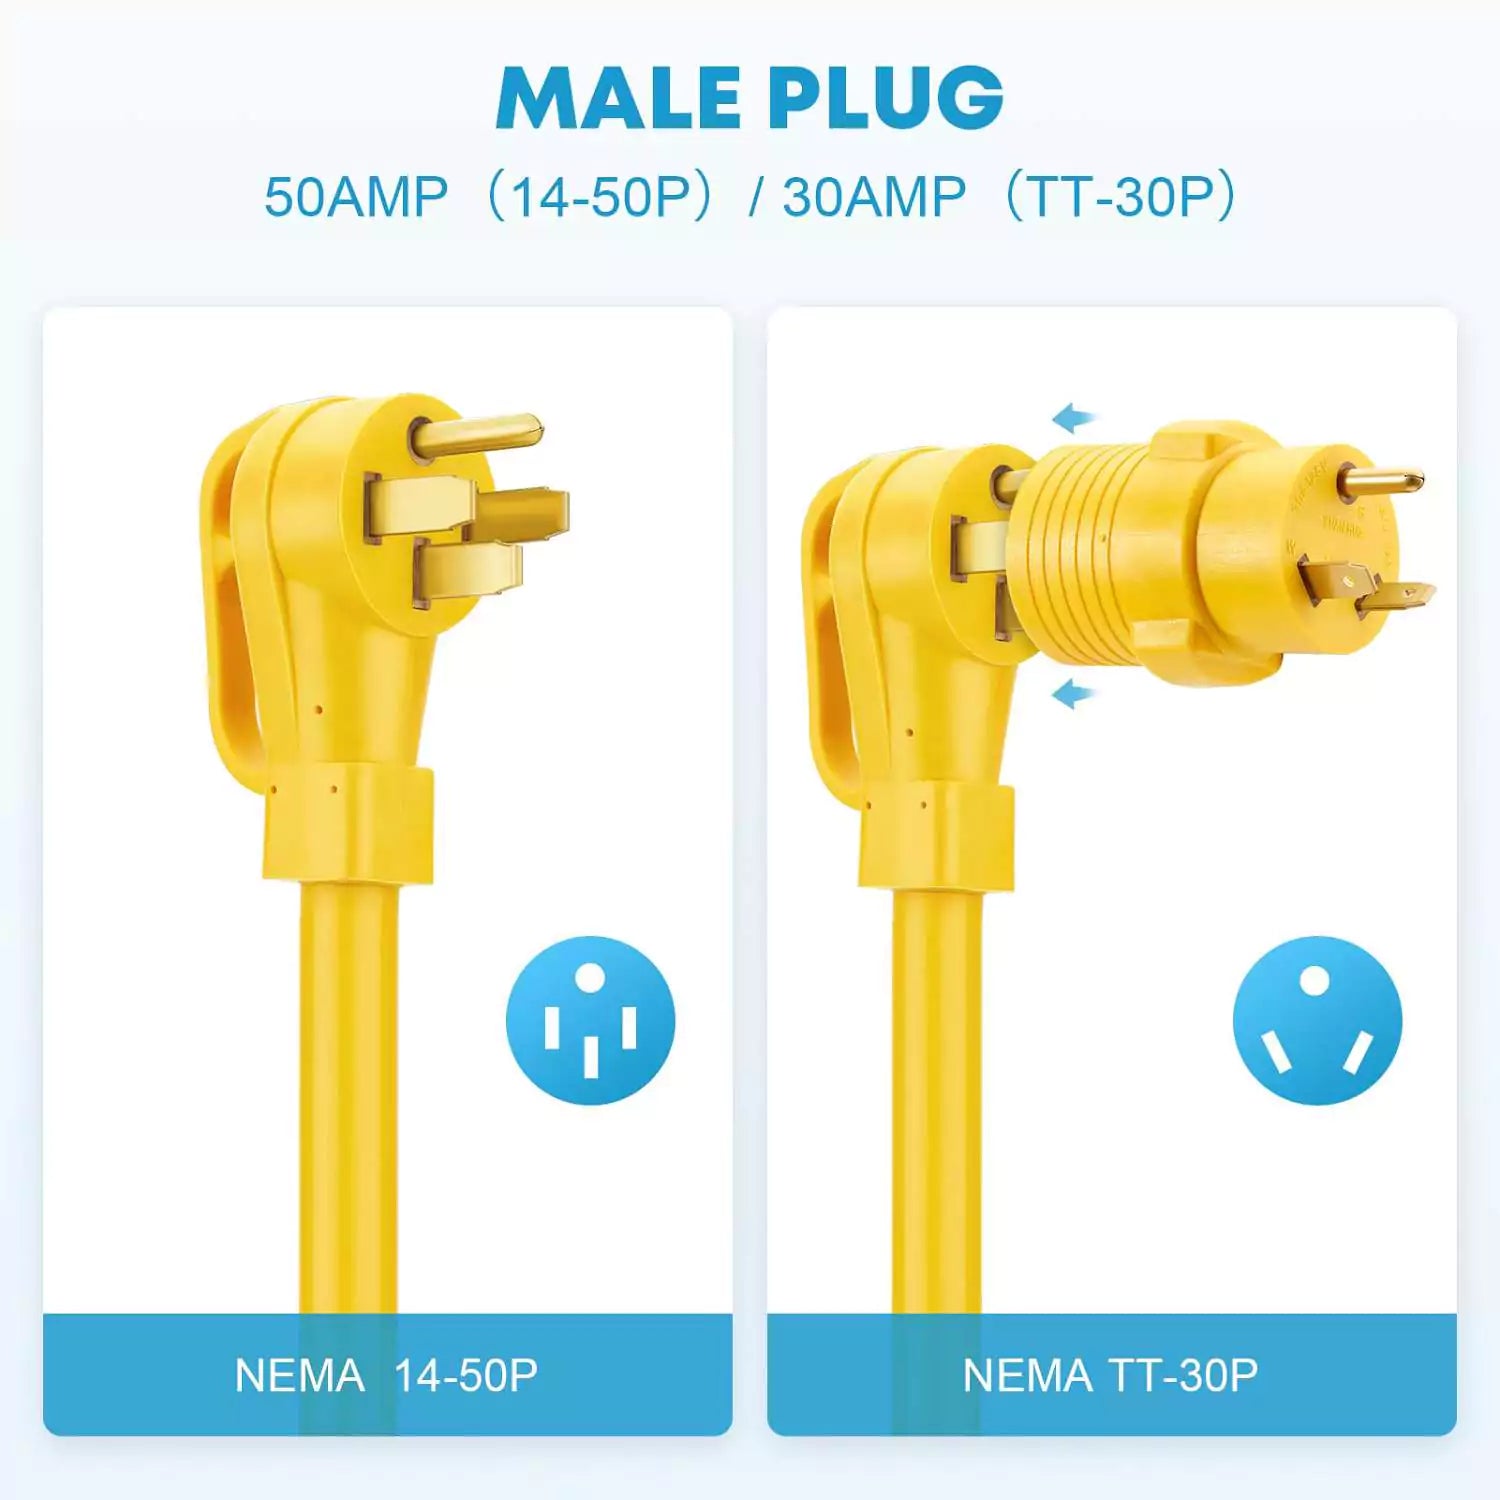 50 amp (14-50P) to 30 amp (TT-30P) male plug RV cord